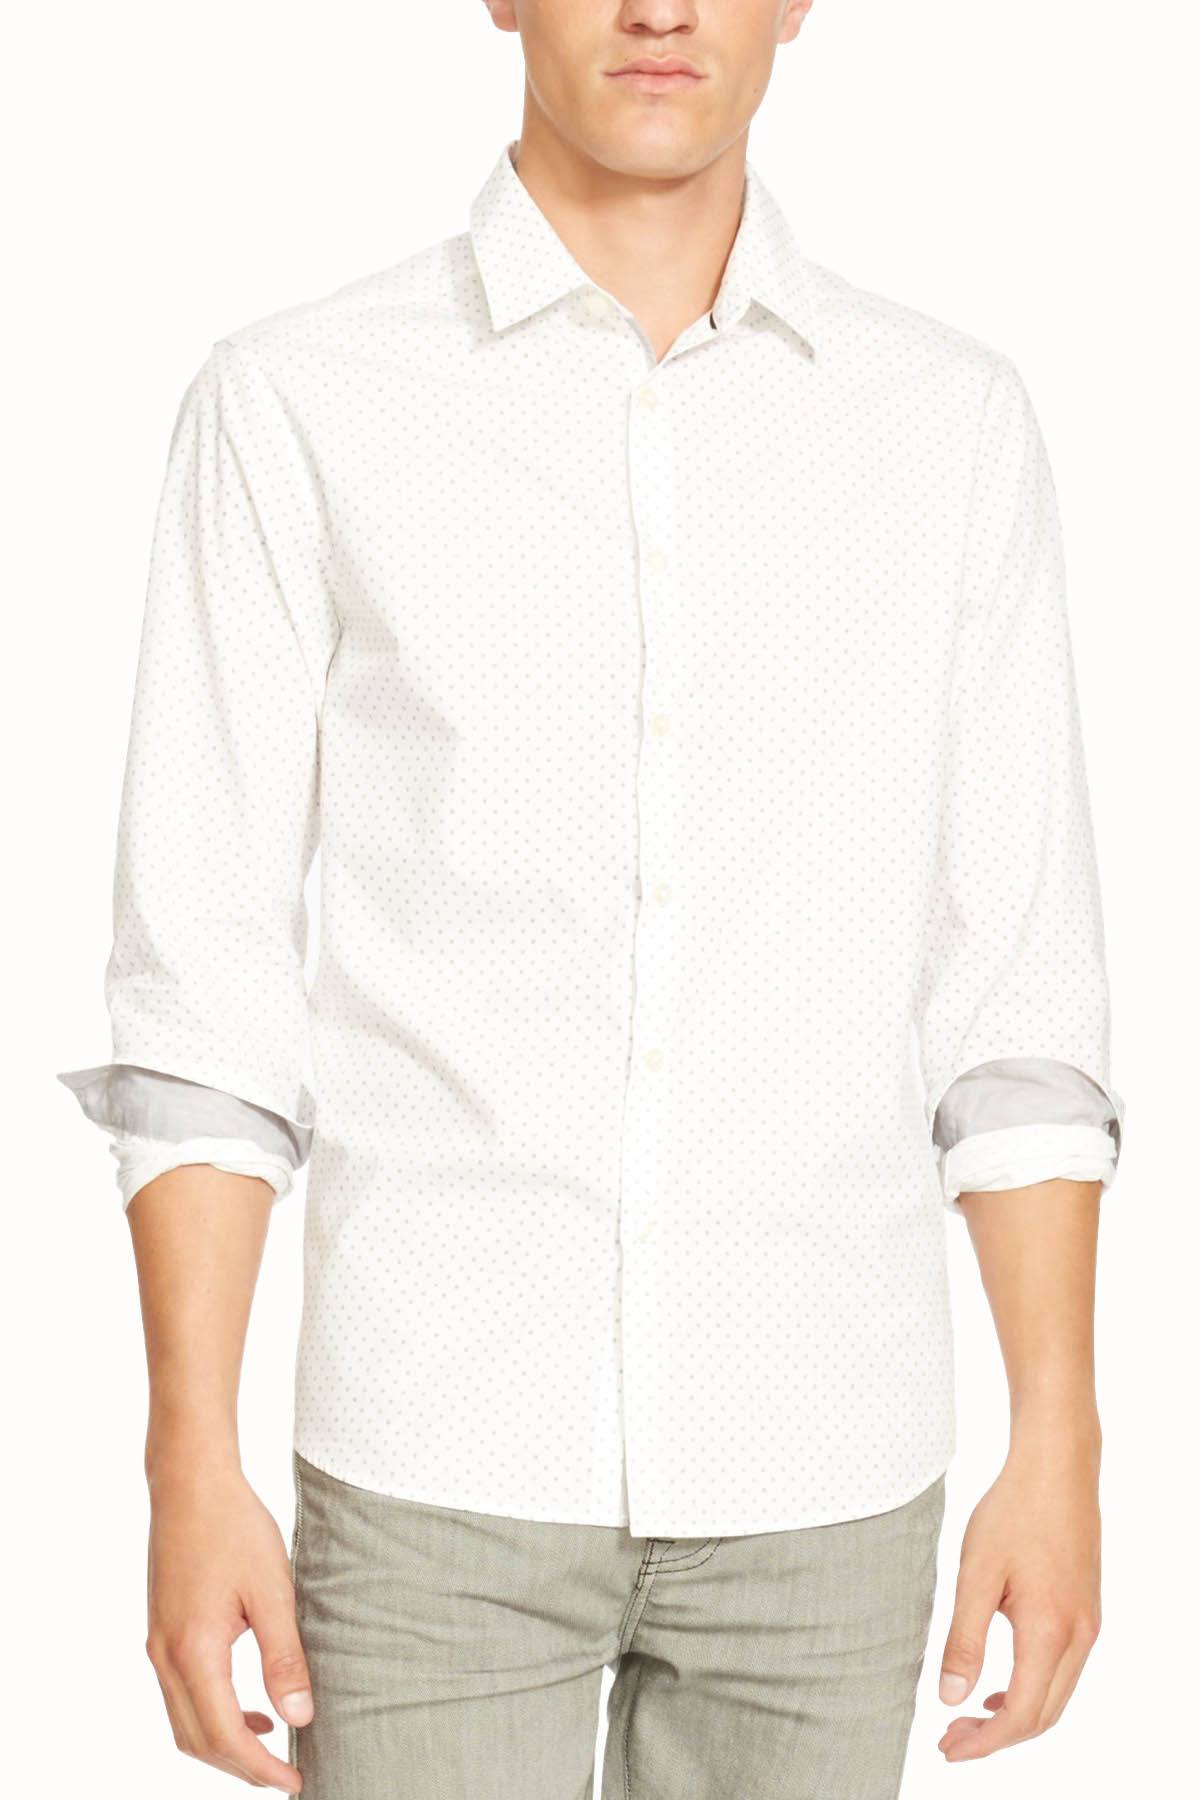 Kenneth Cole New York White Circle-Print Slim-Fit Shirt